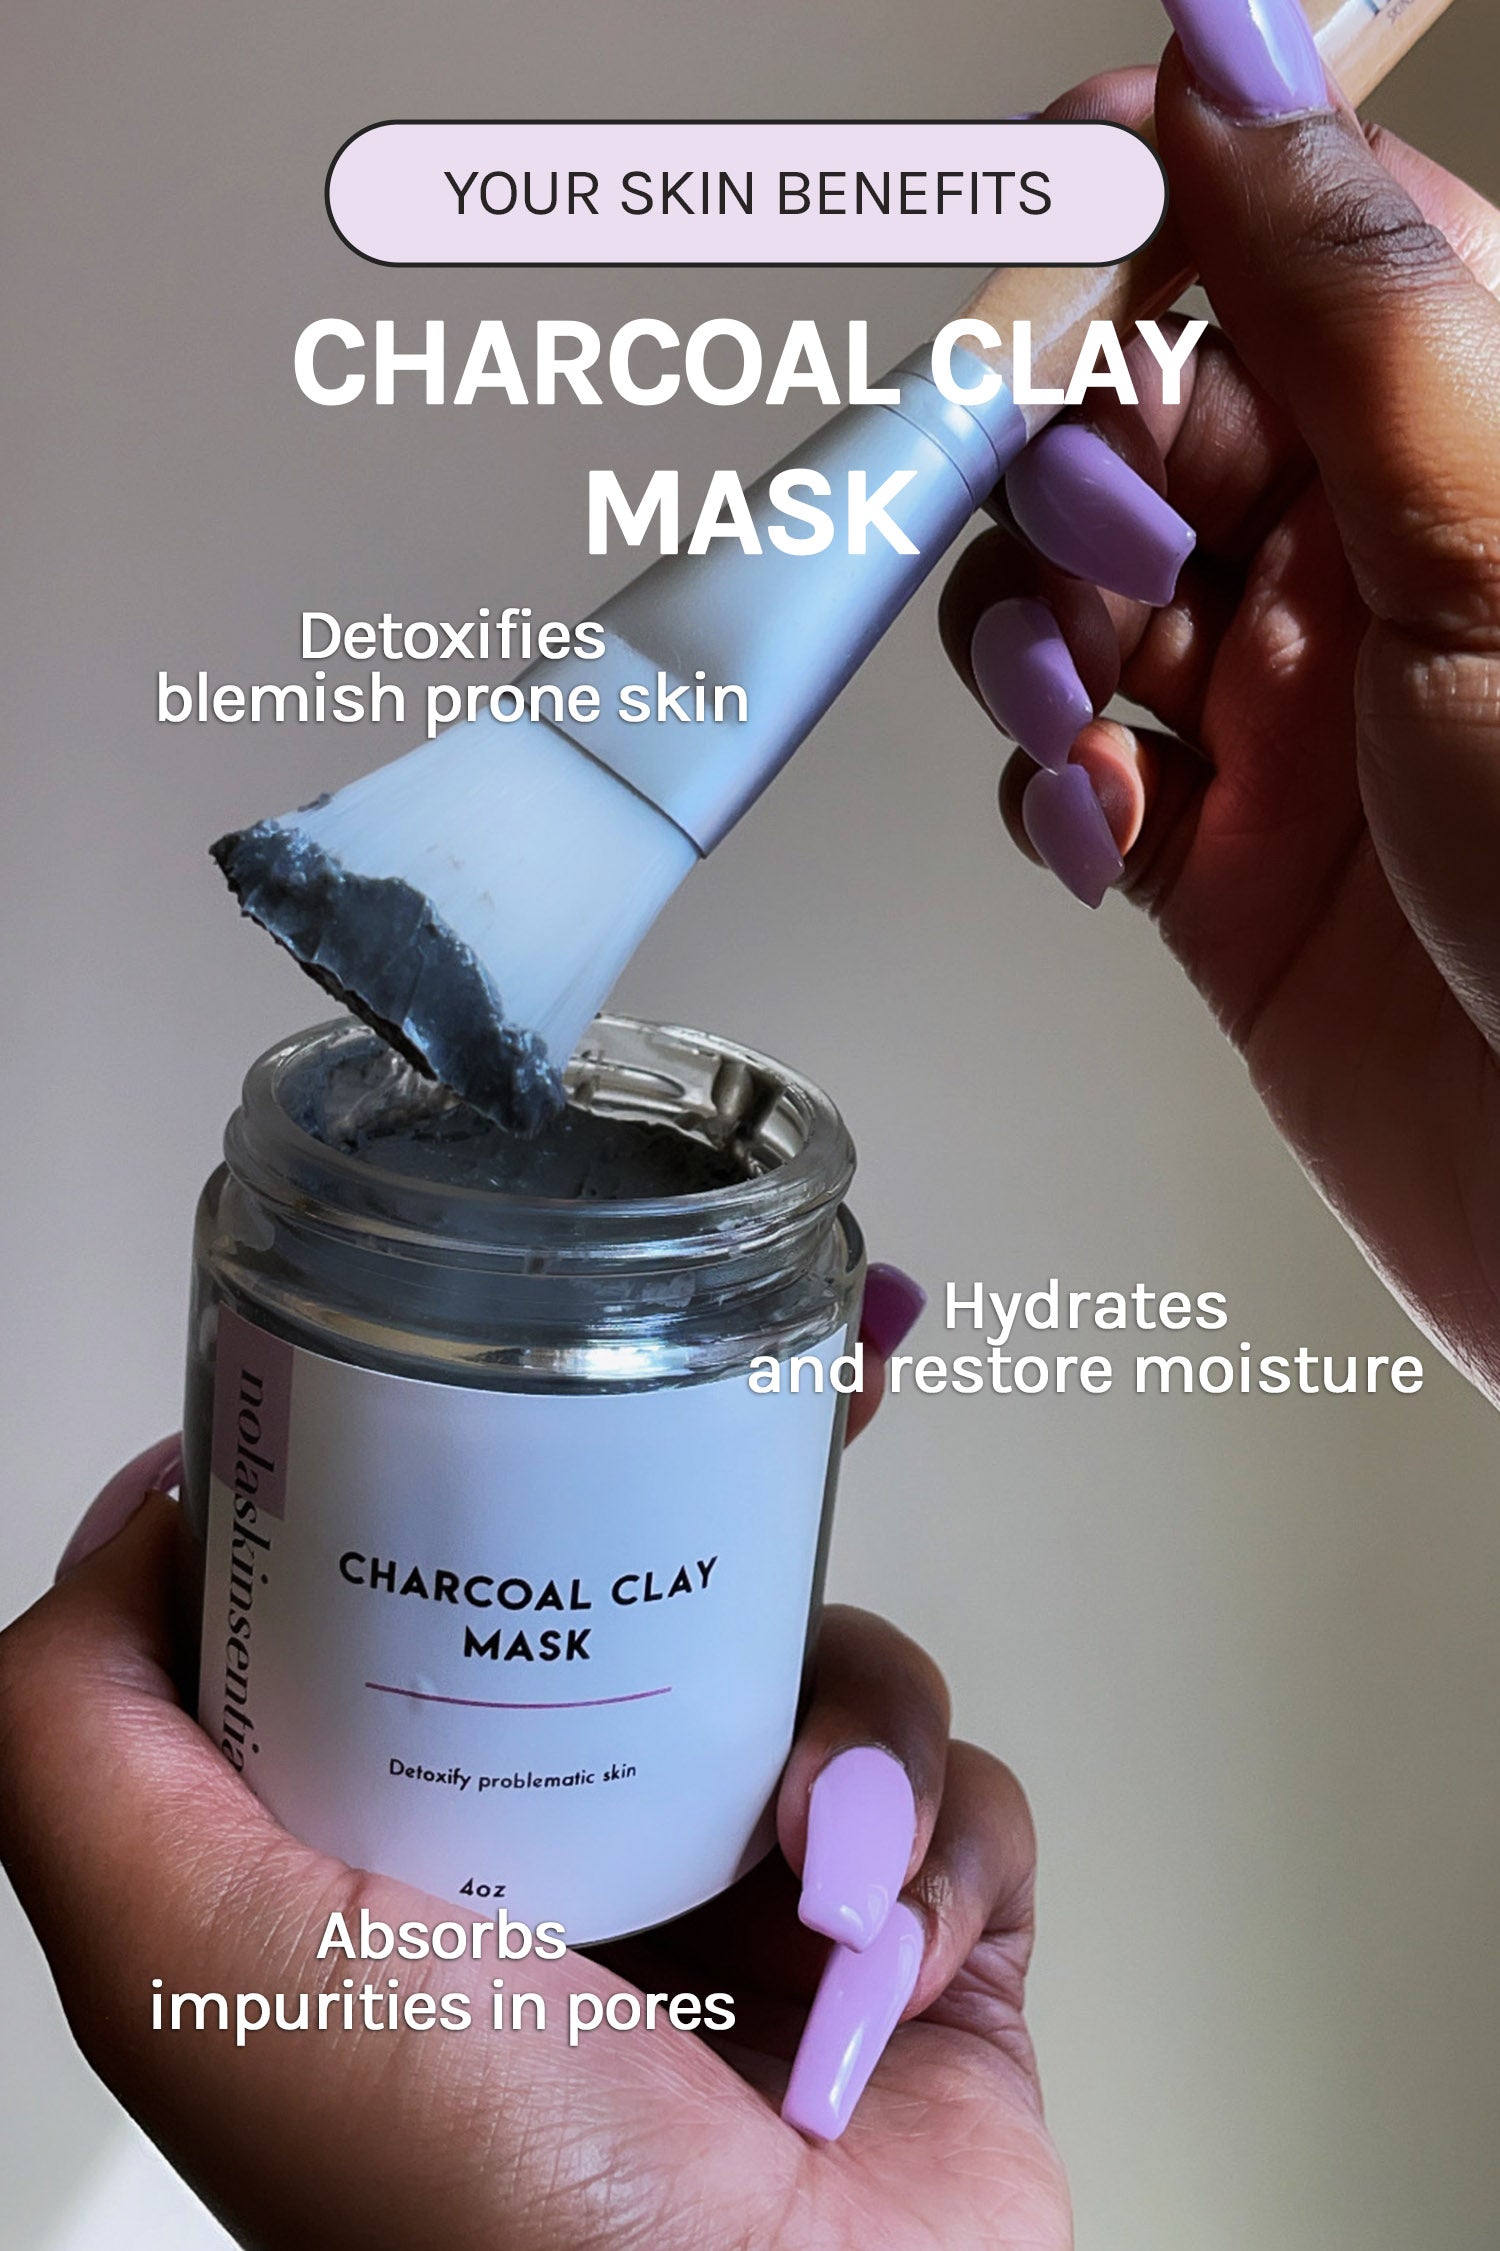 Detoxifying Charcoal Mask